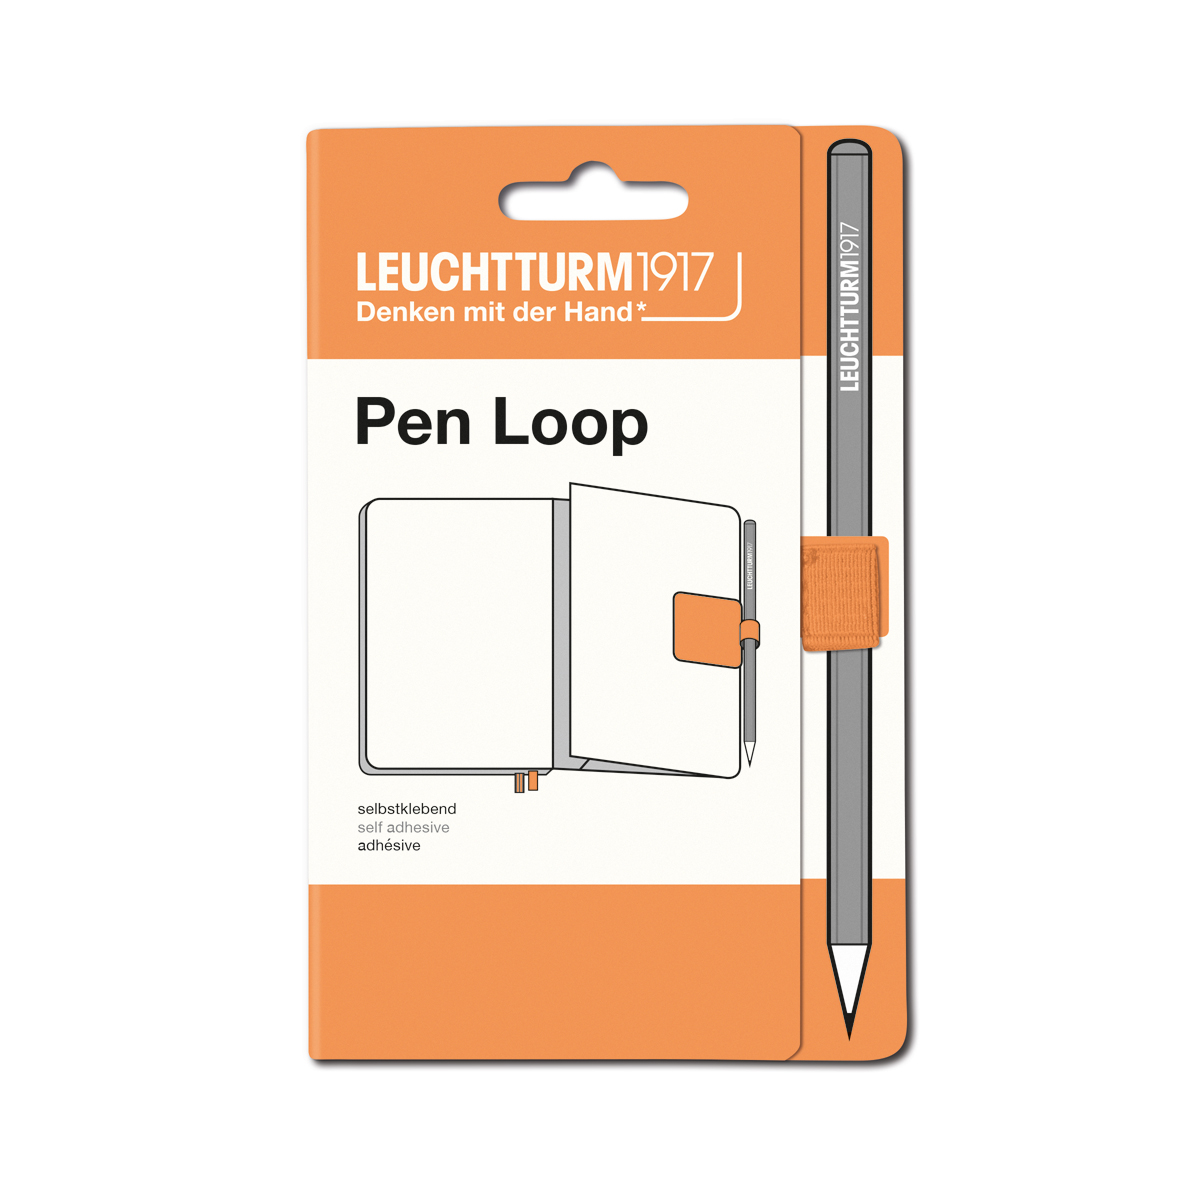 pen loop apricot by Leuchtturm1917